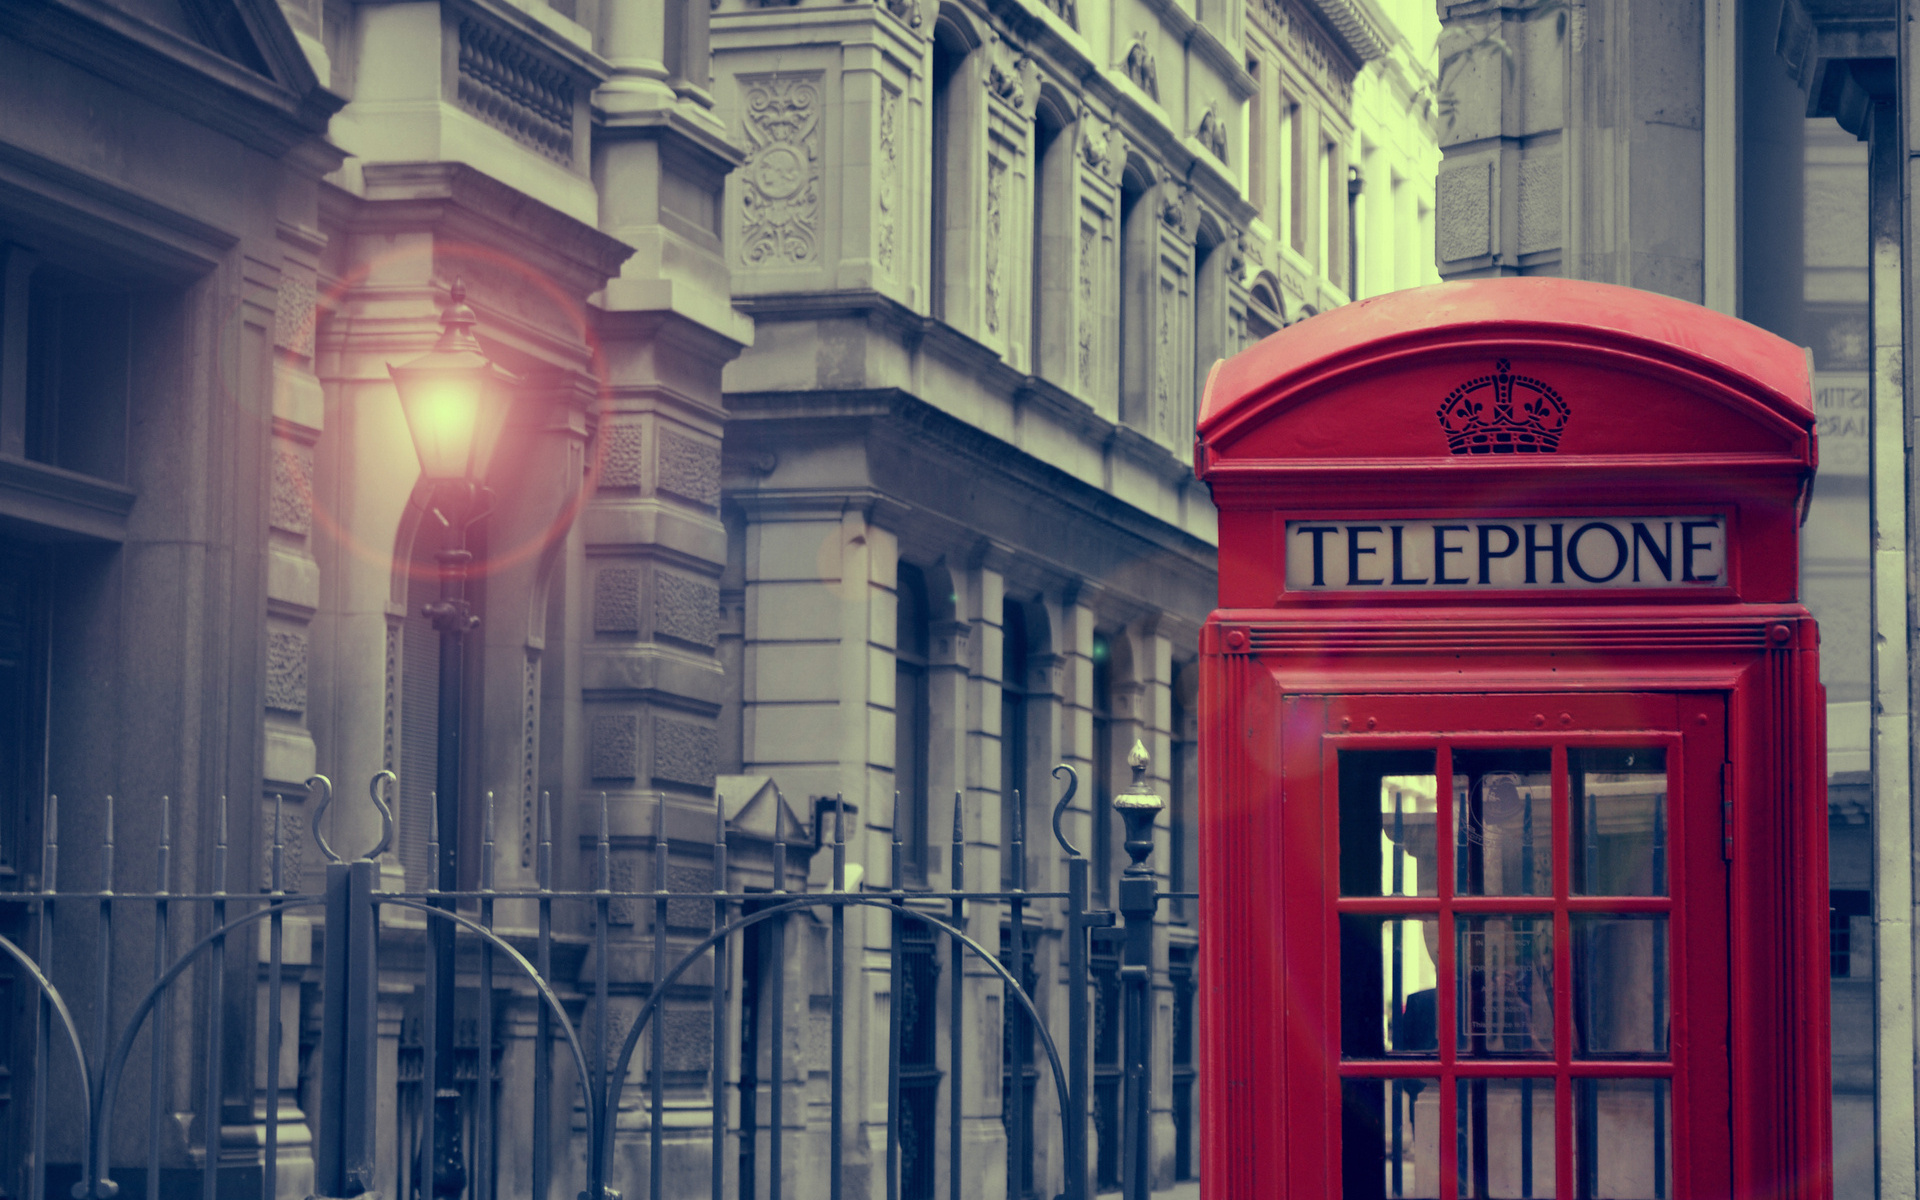 London Phone Booth Wallpaper